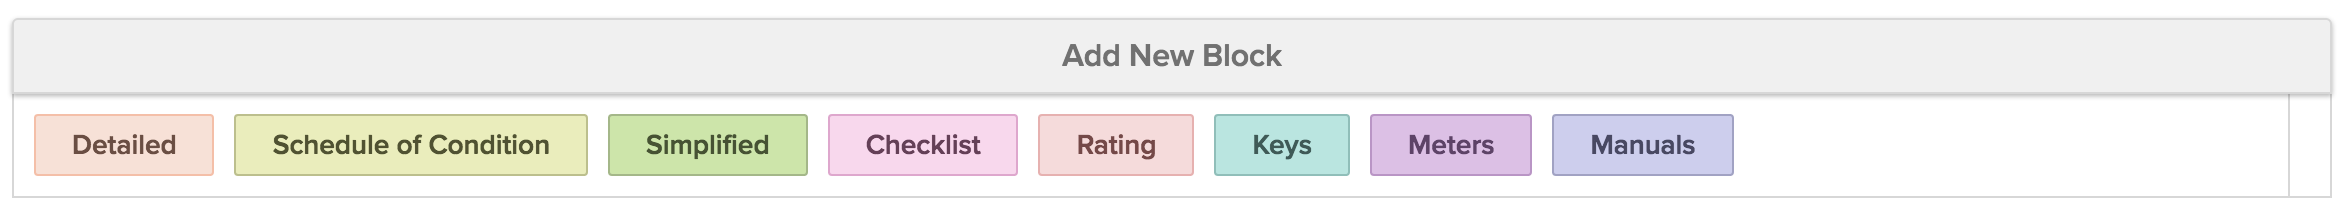 Block/Format Types